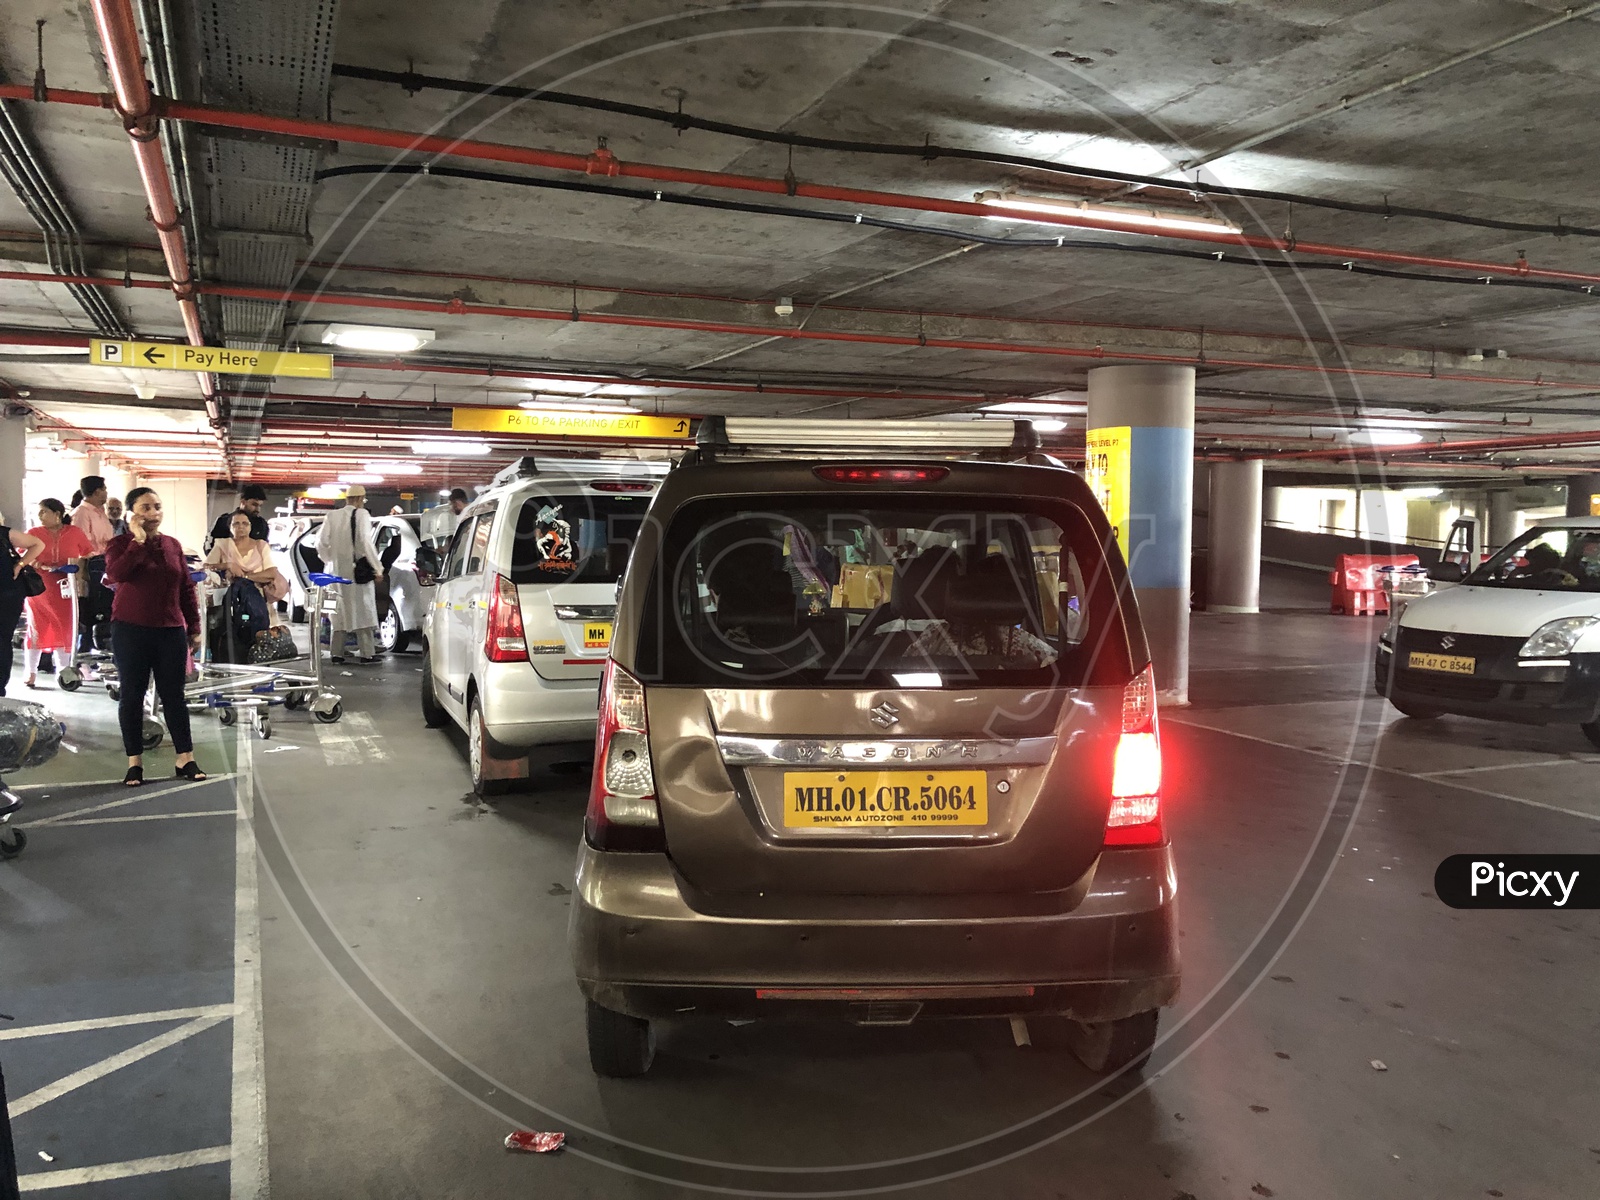 Taxi Cabs At Pickup Center In Terminal 2 Of Mumbai Airport